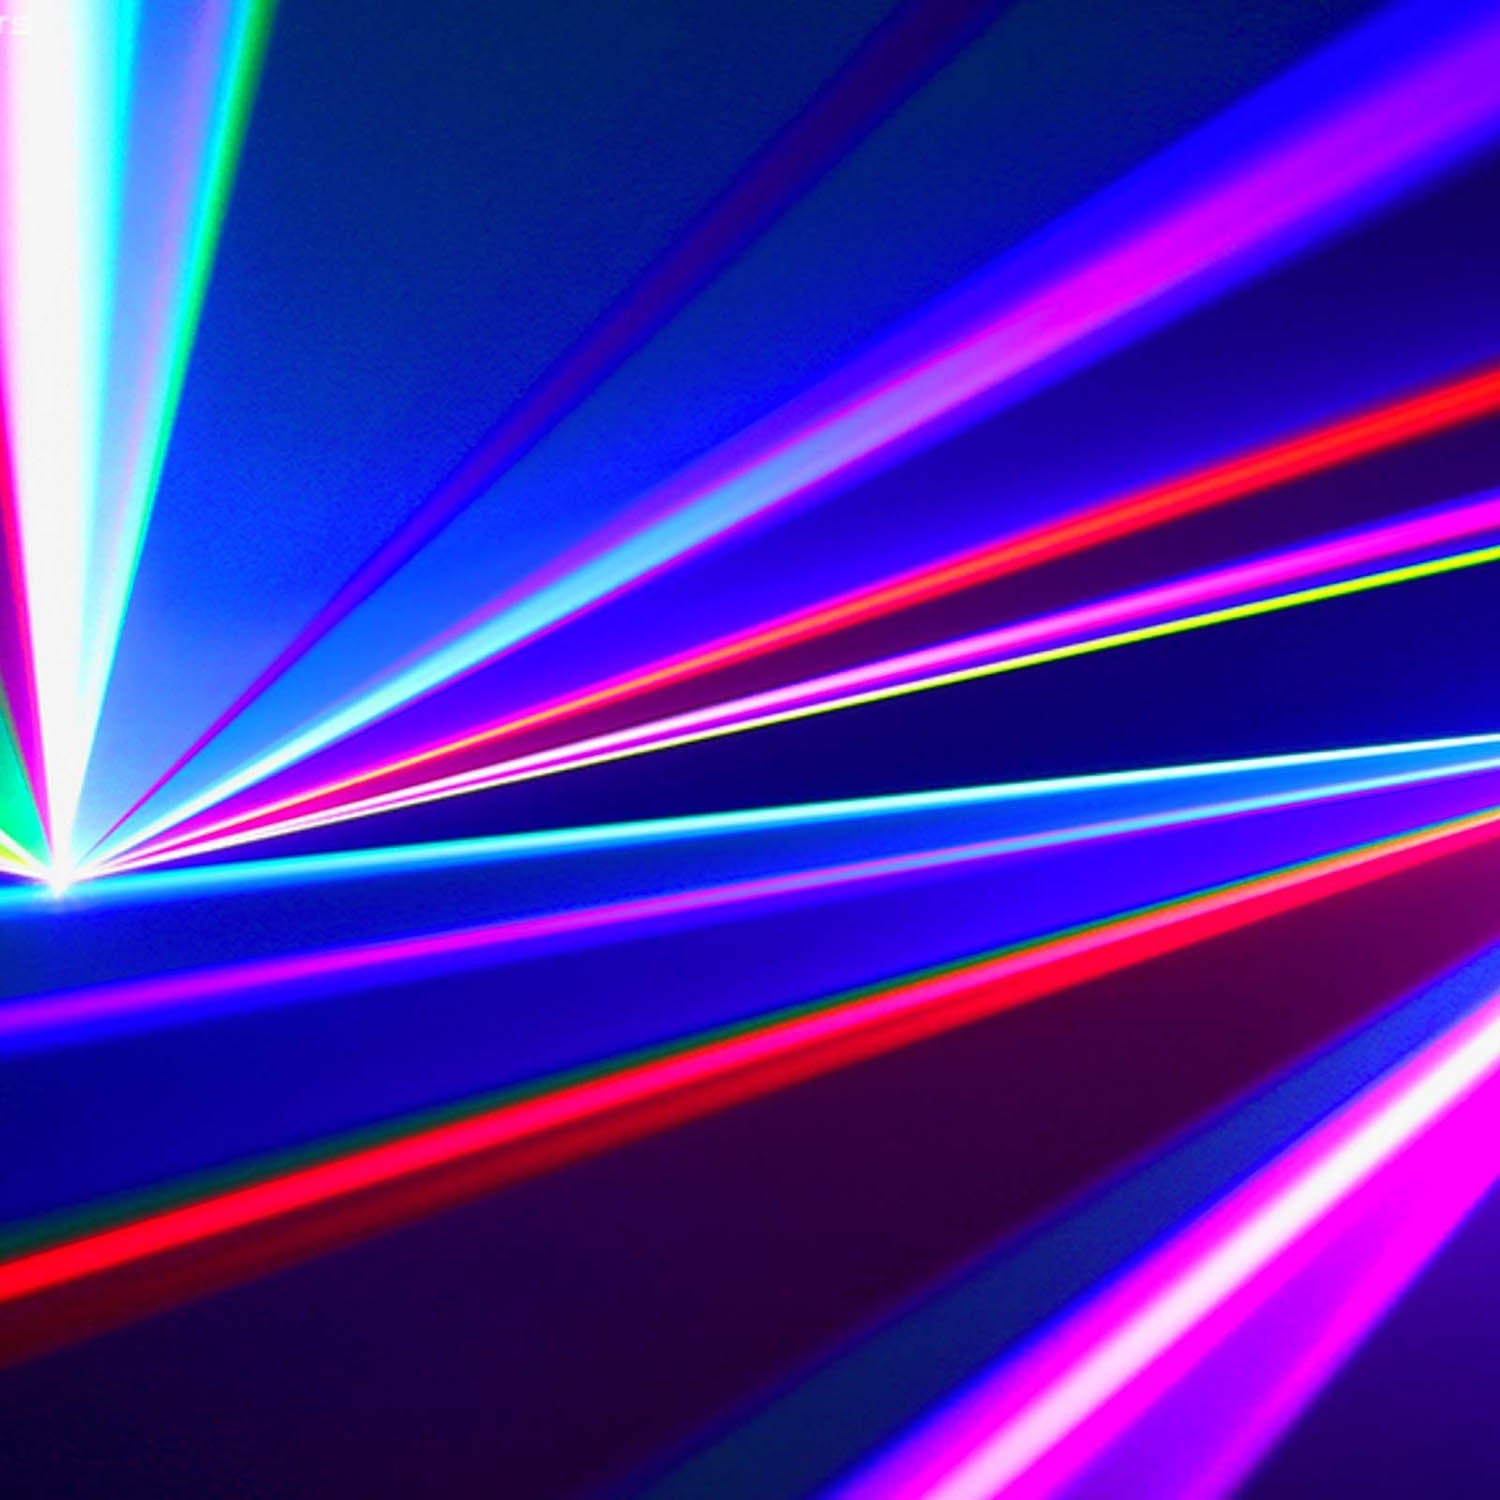 B-Stock: X-Laser Caliente Aurora Full Color Aerial Effect Laser by X-Laser